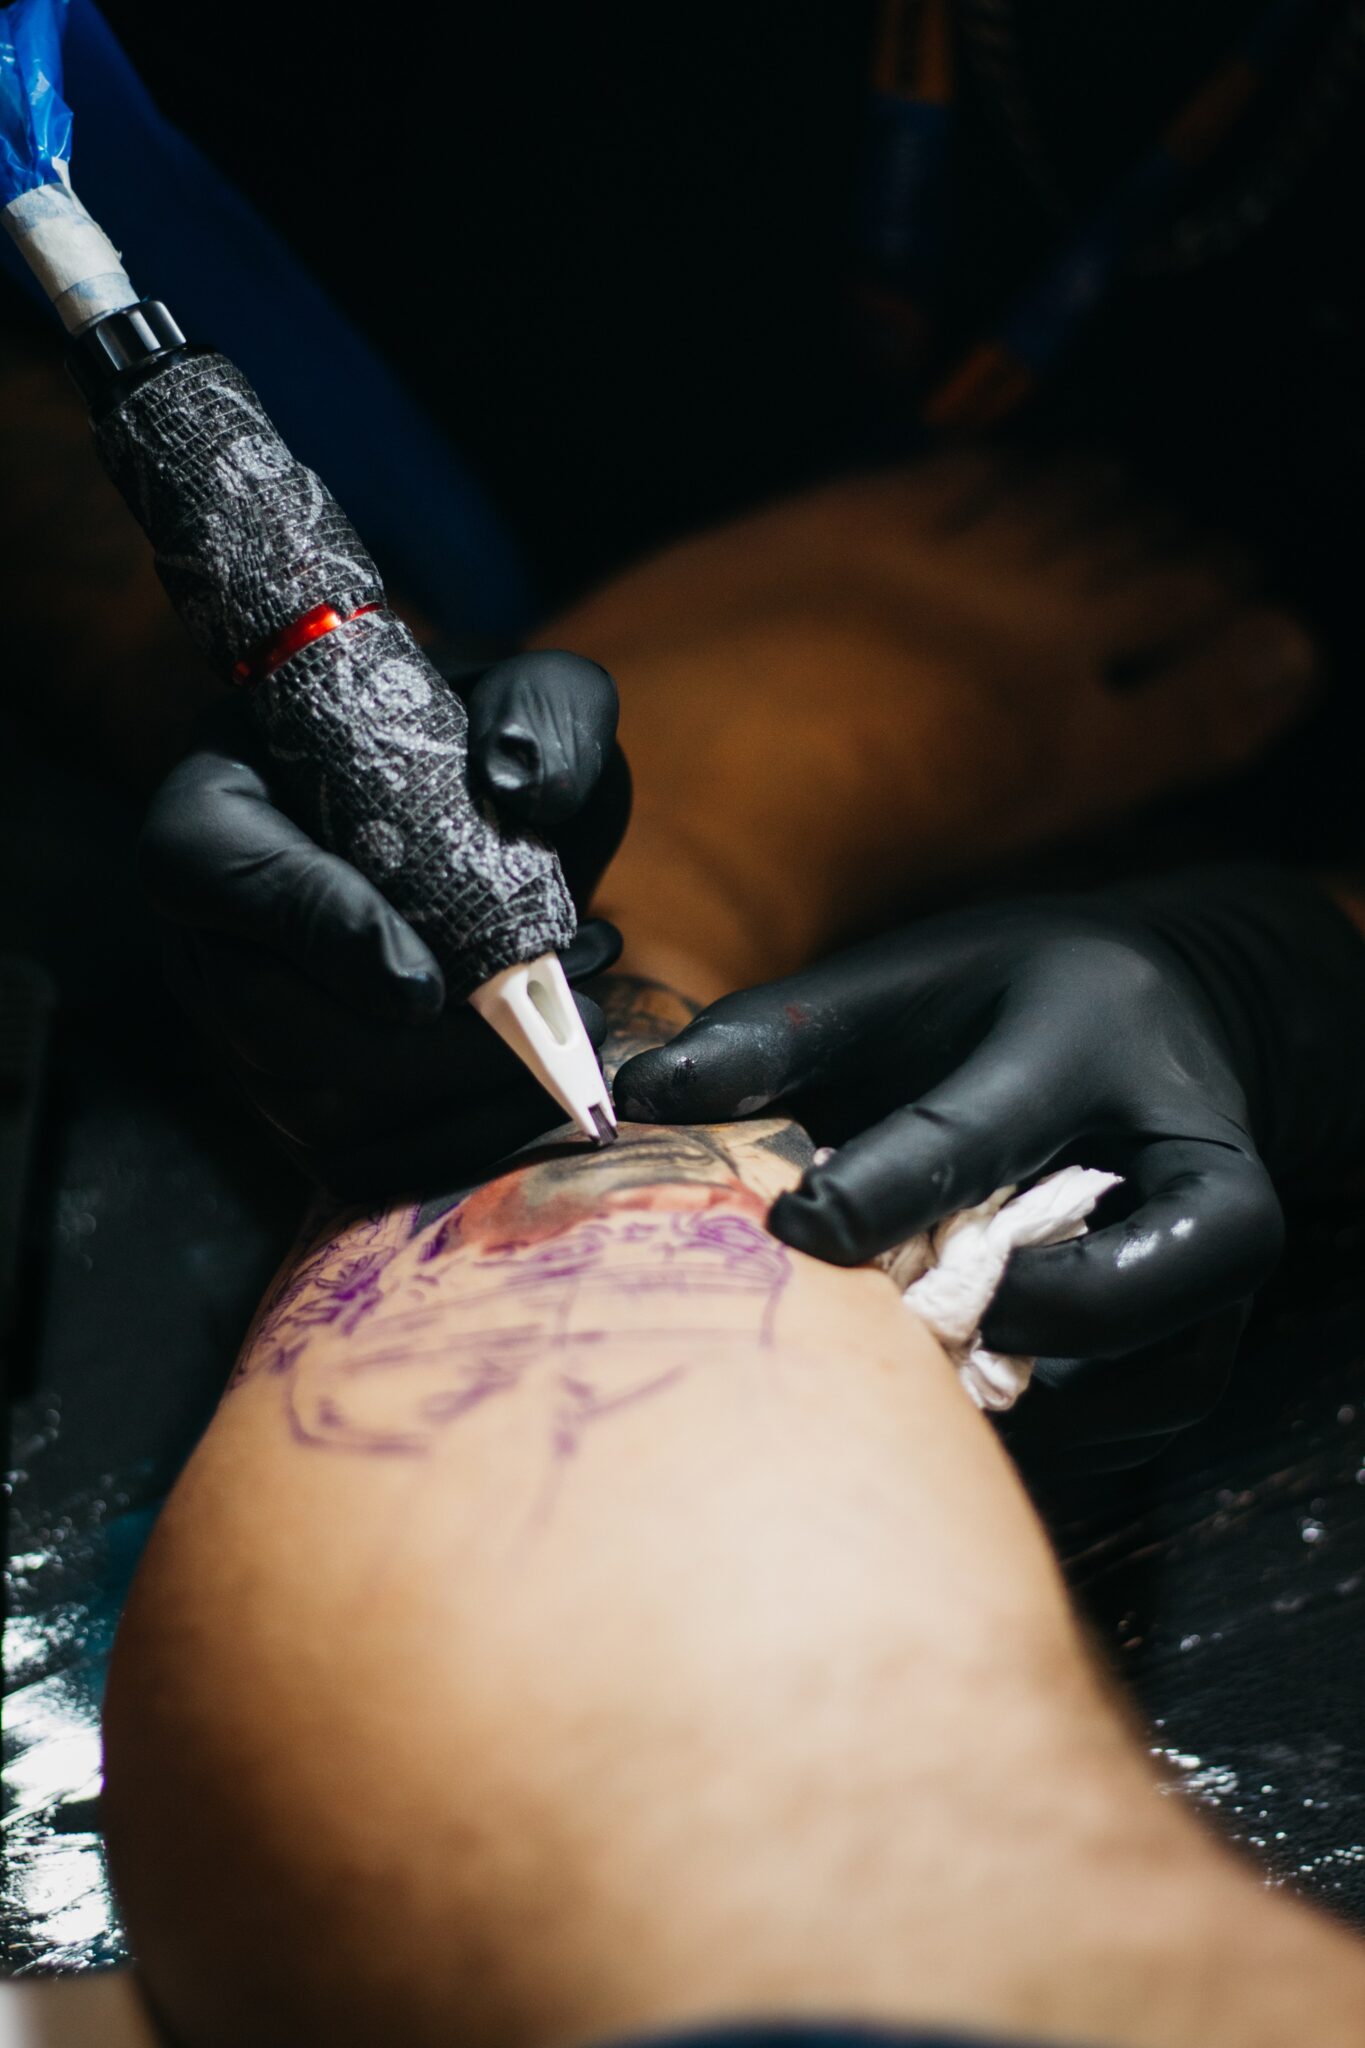 The best tattoo artists in the world. A tattooist doing a sleeve job.